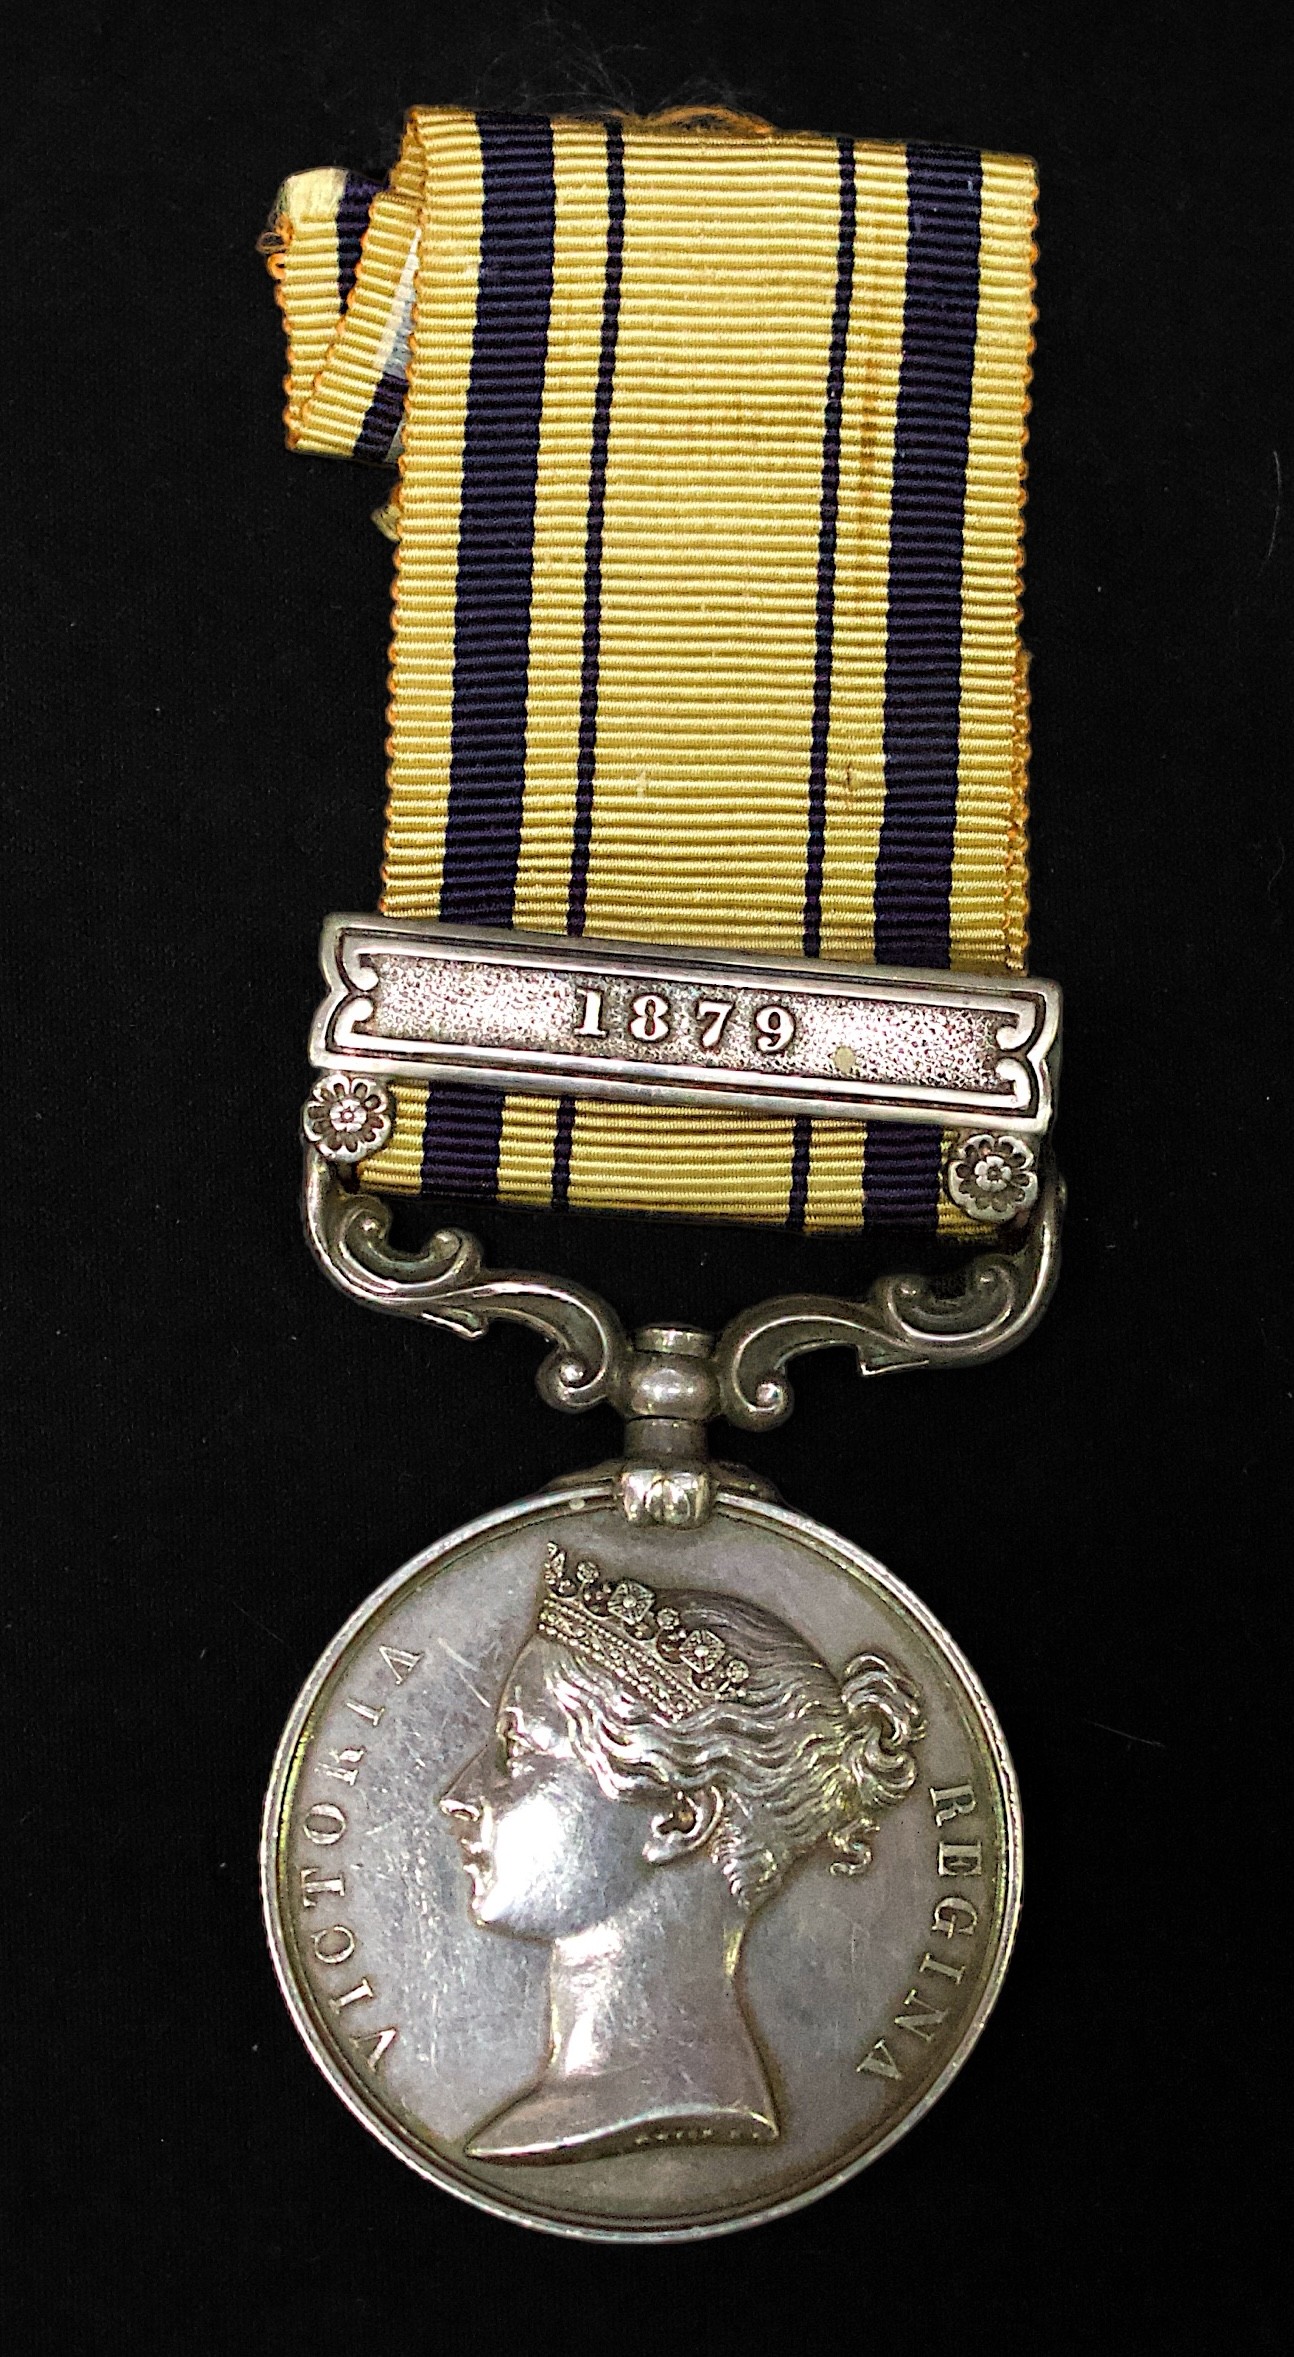 A Queen Victoria South Africa Medal (Zulu & Basuto War) with 1879 Clasp, to 'LIEUT: D.P. ROBERTSON